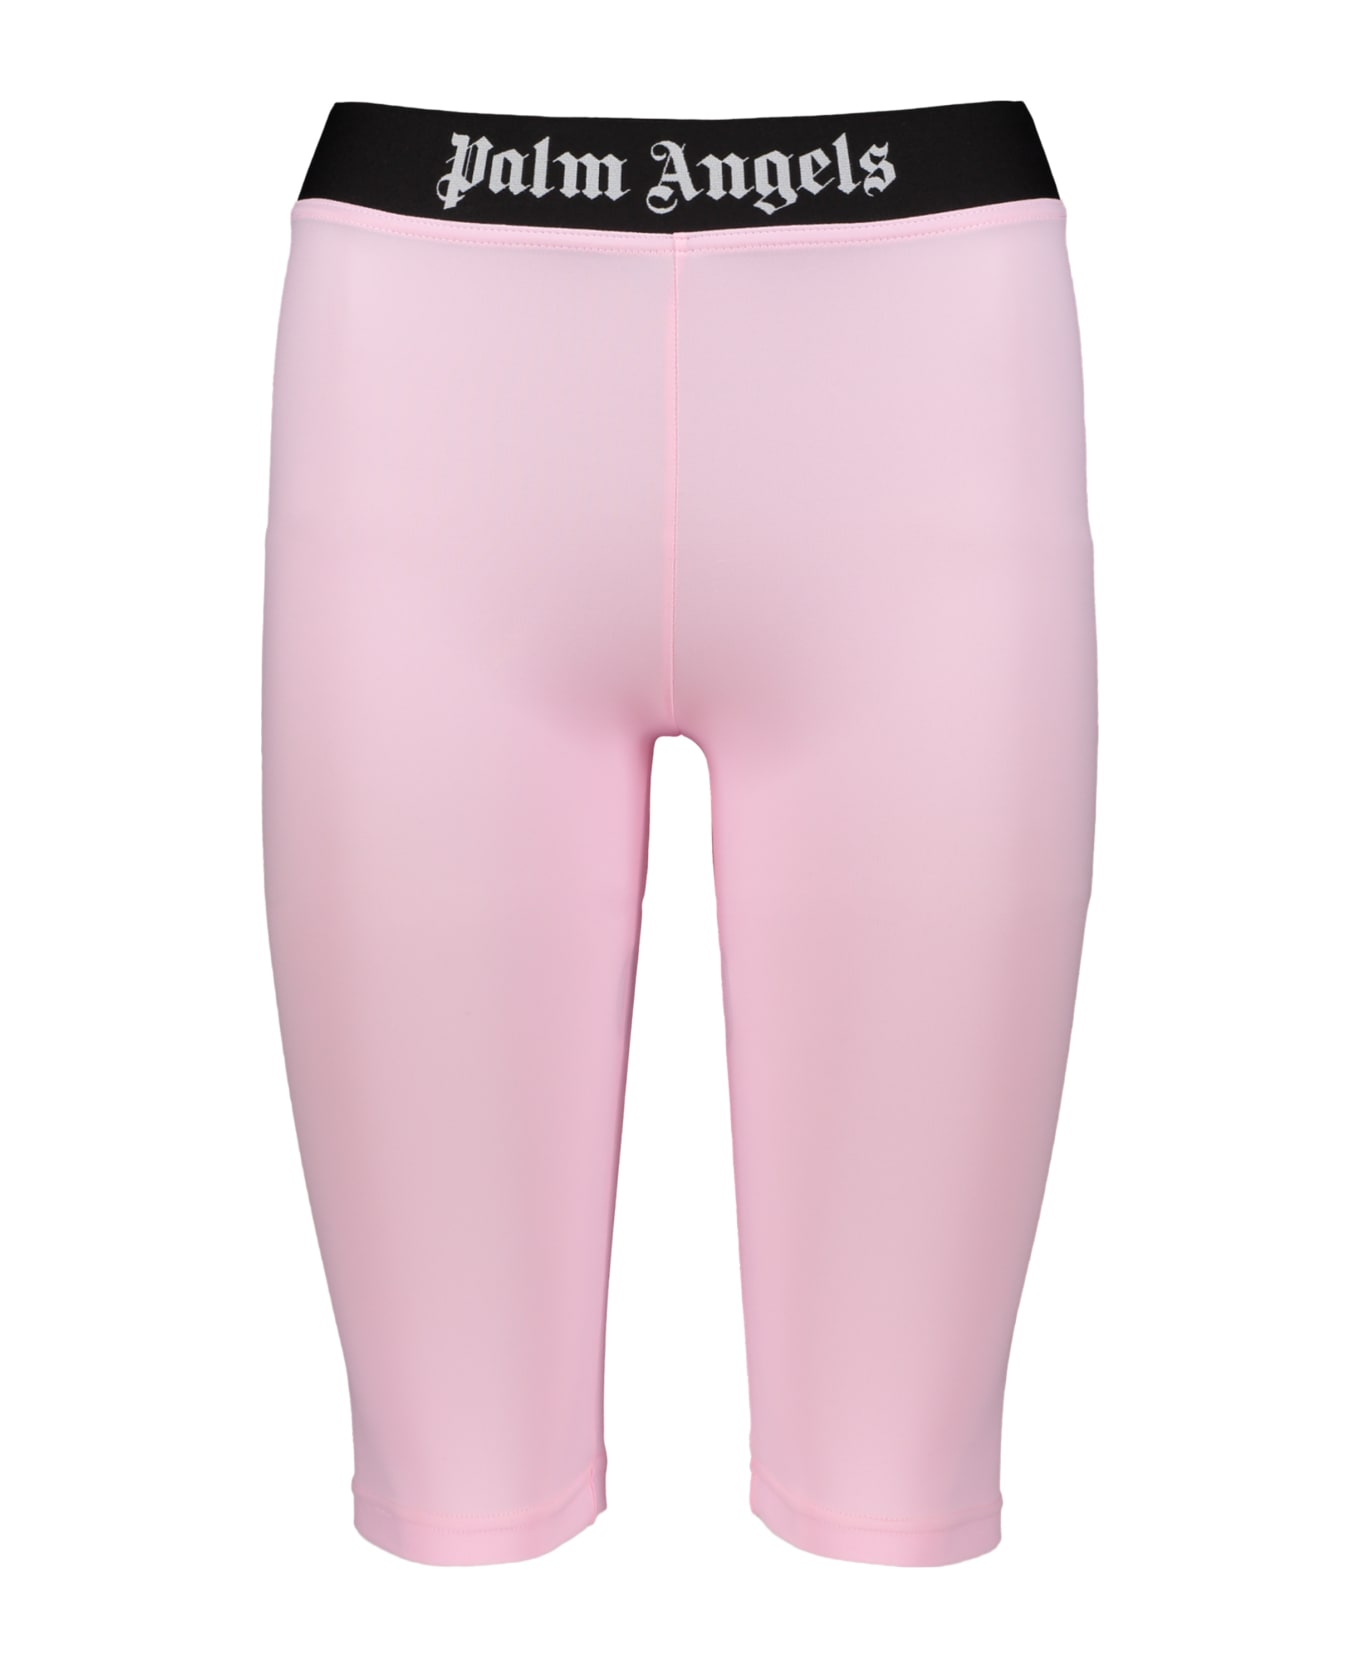 Palm Angels Logo Print Shorts - Pink ショーツ